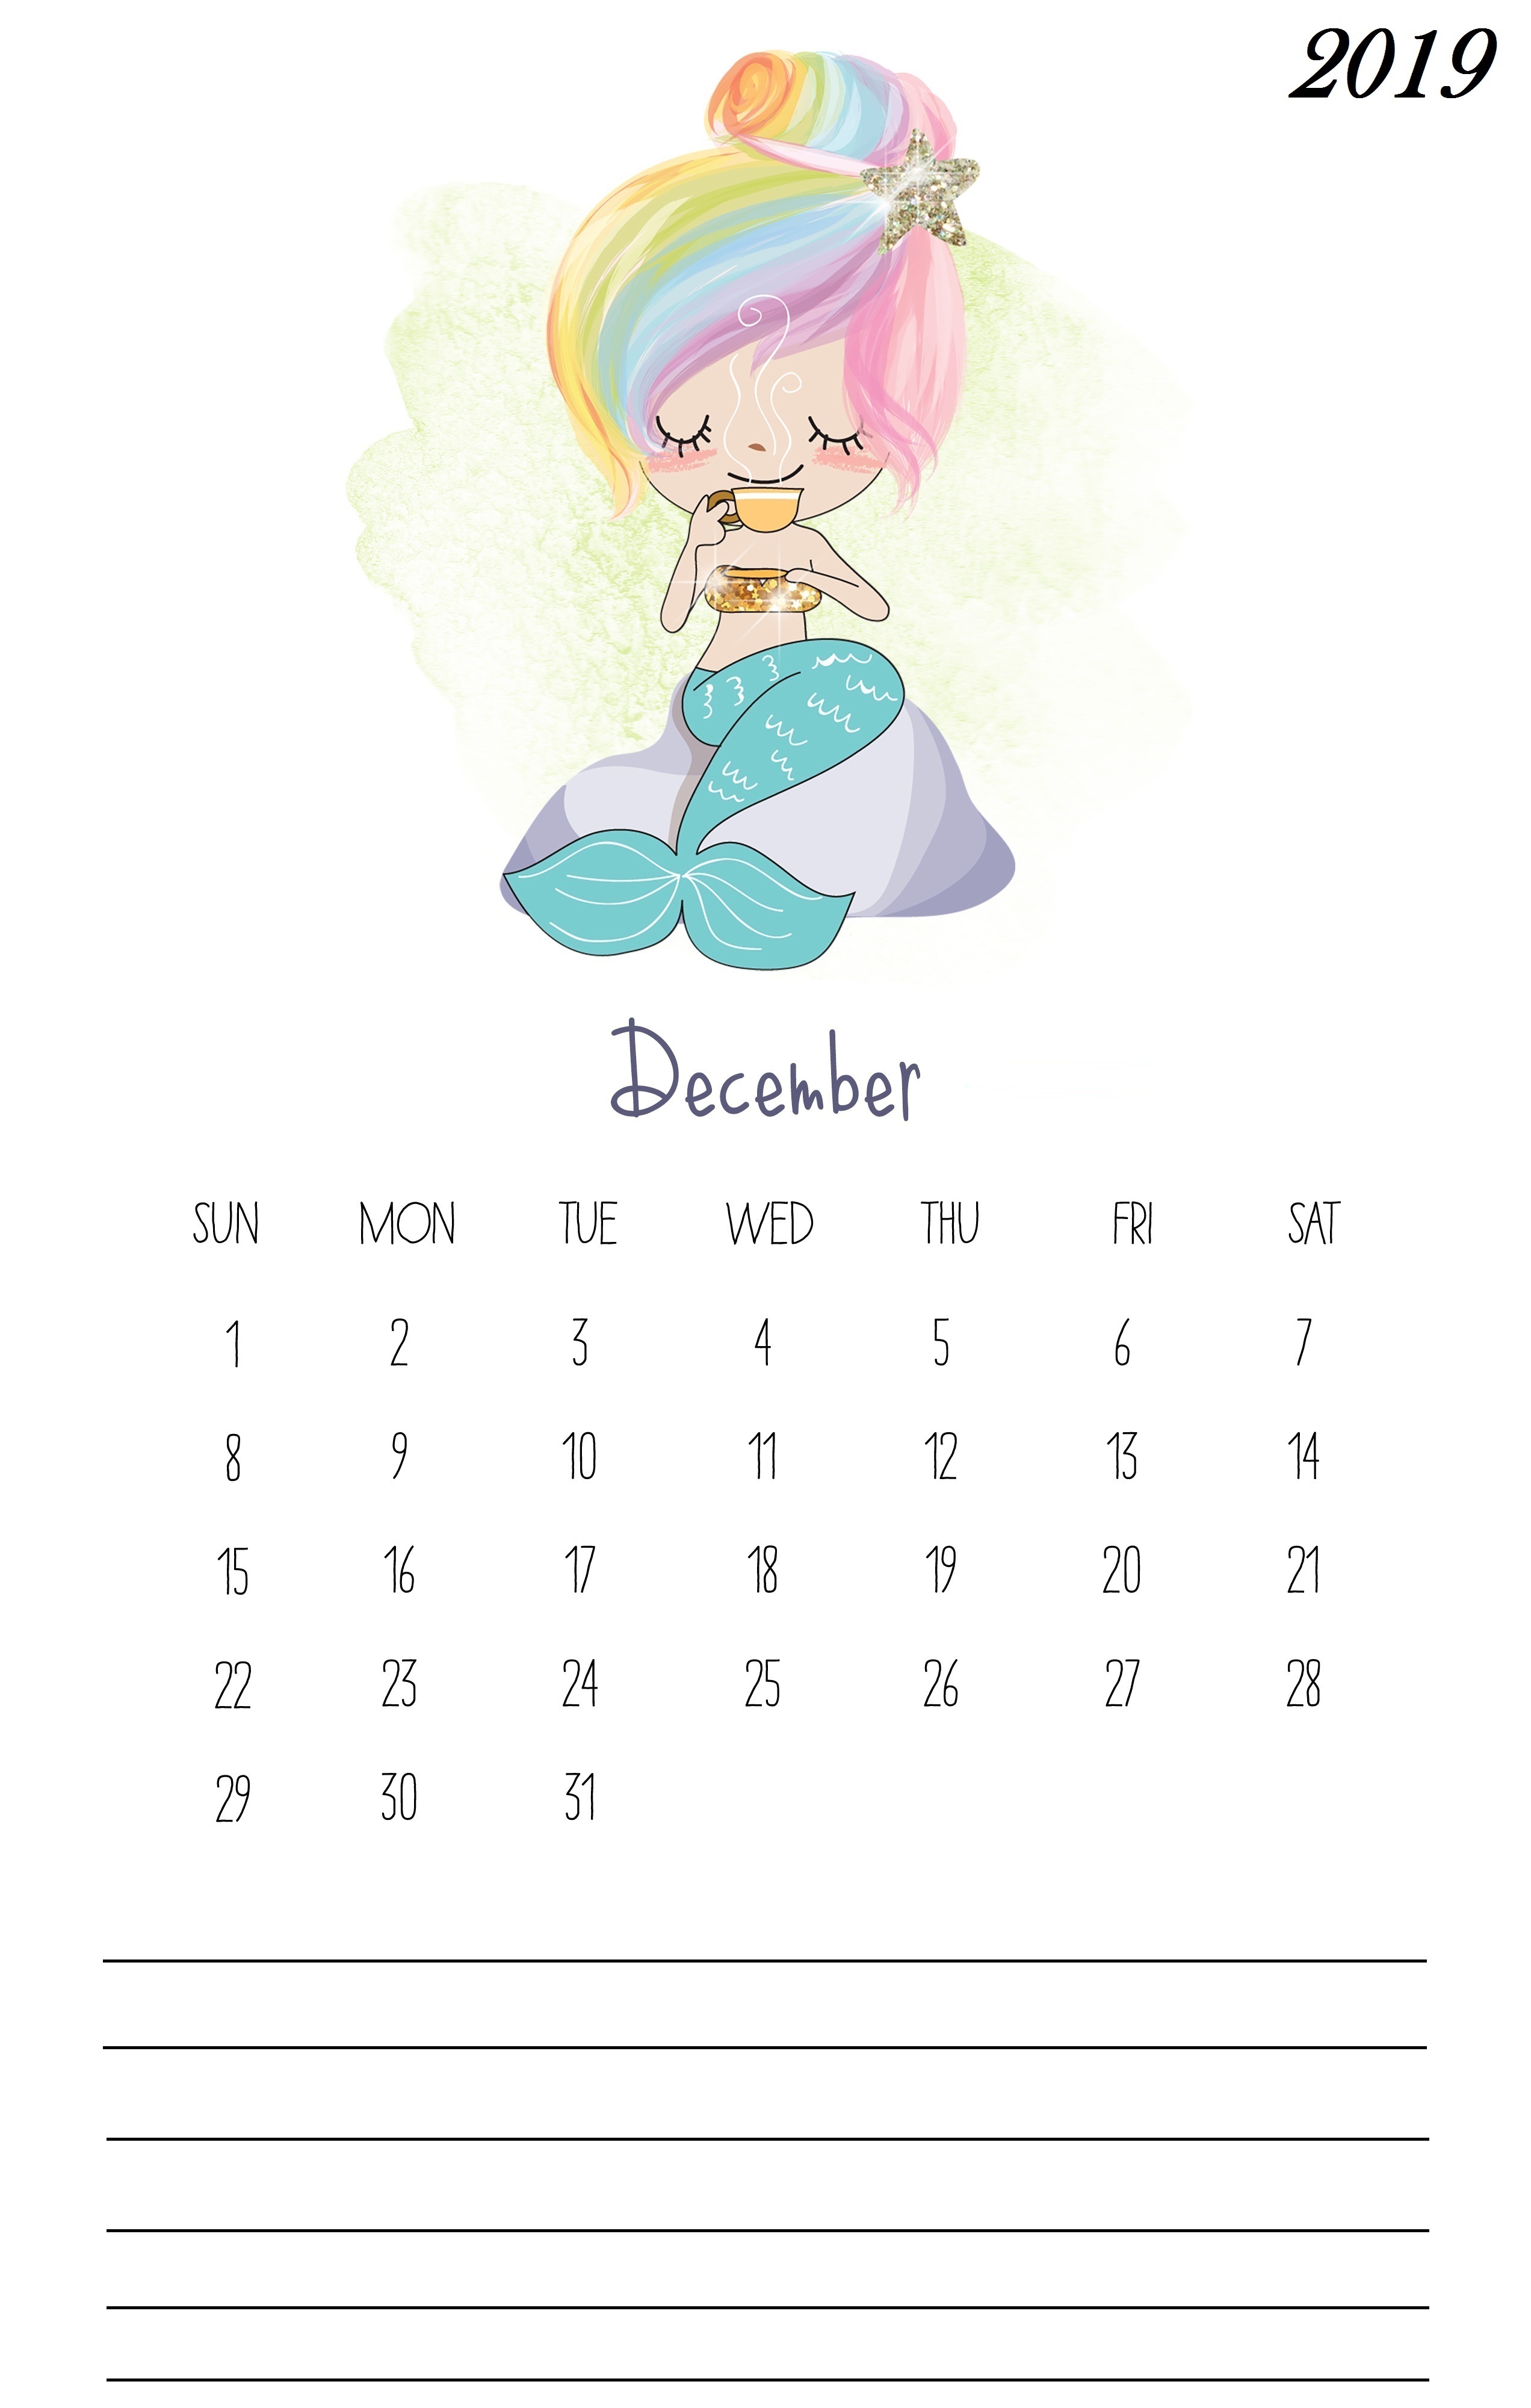 December 2019 Cute Calendar Template